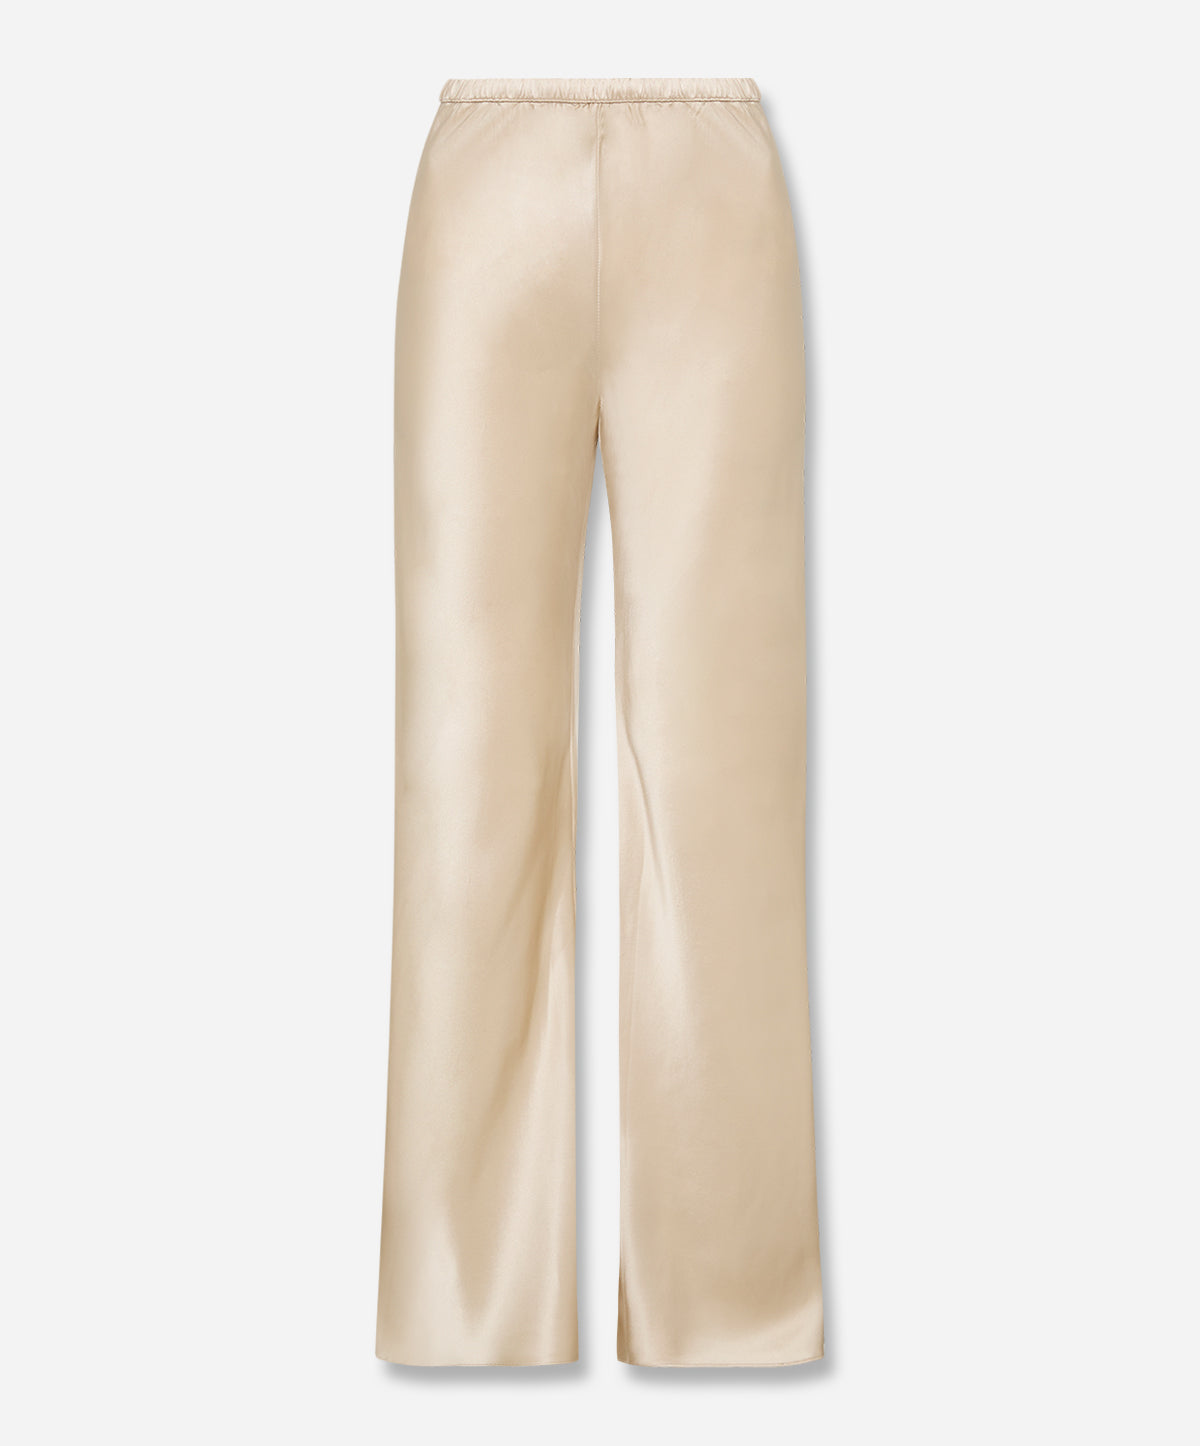 Capri Silk Bias Cut Pant, Black/Cream, Pants